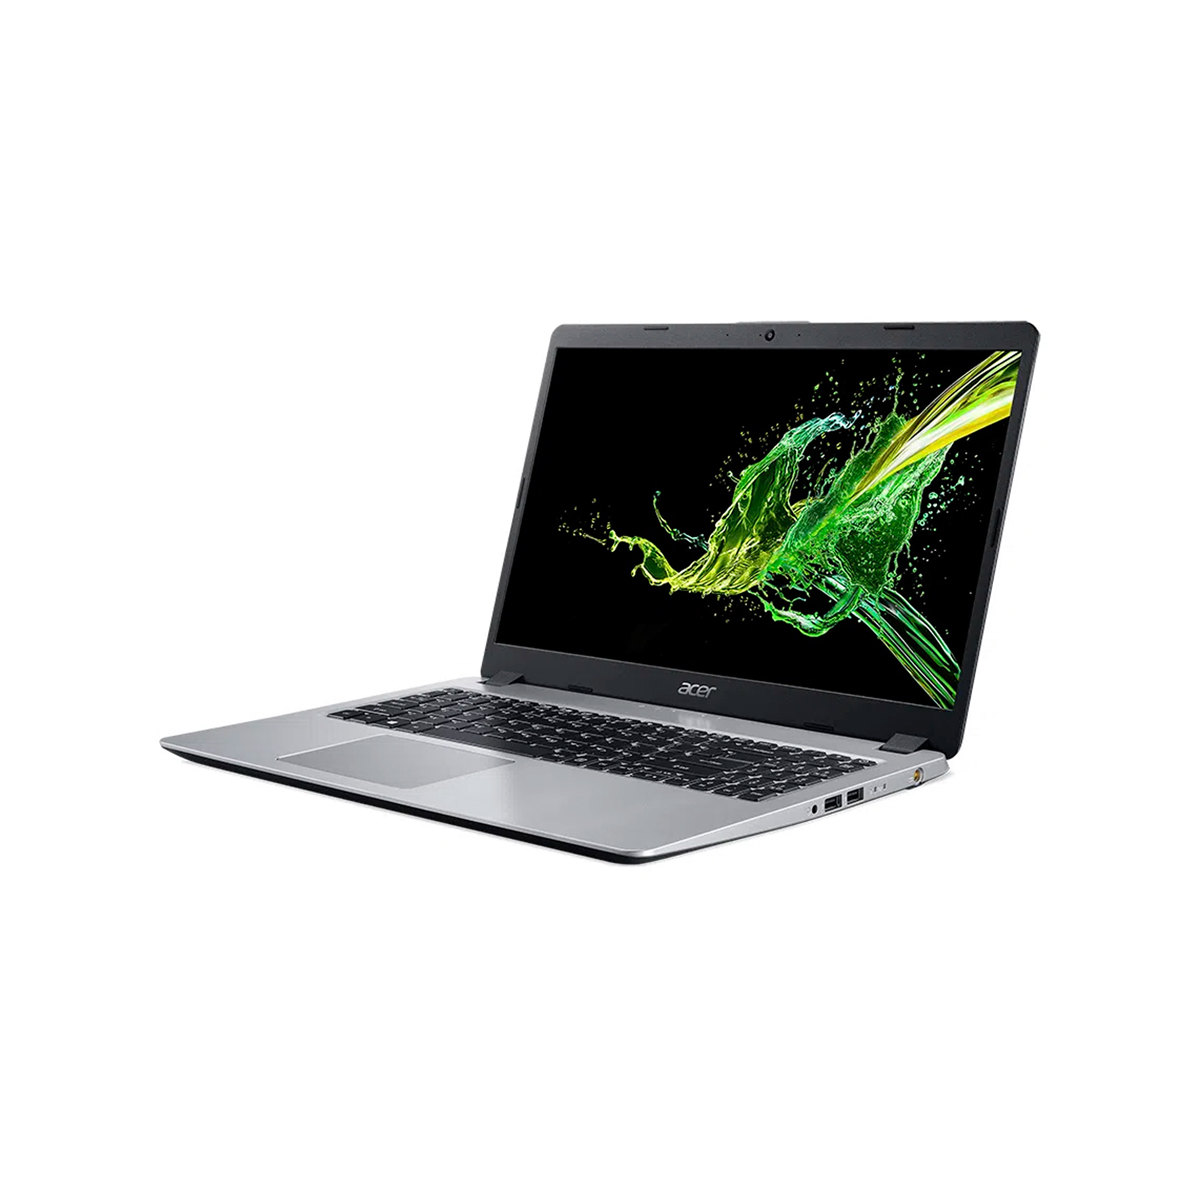 Notebook Acer A515 Core I5 8265u Memória 8gb Ddr4 Ssd 240gb Tela 15.6' Led Hd Windows 10 Home 